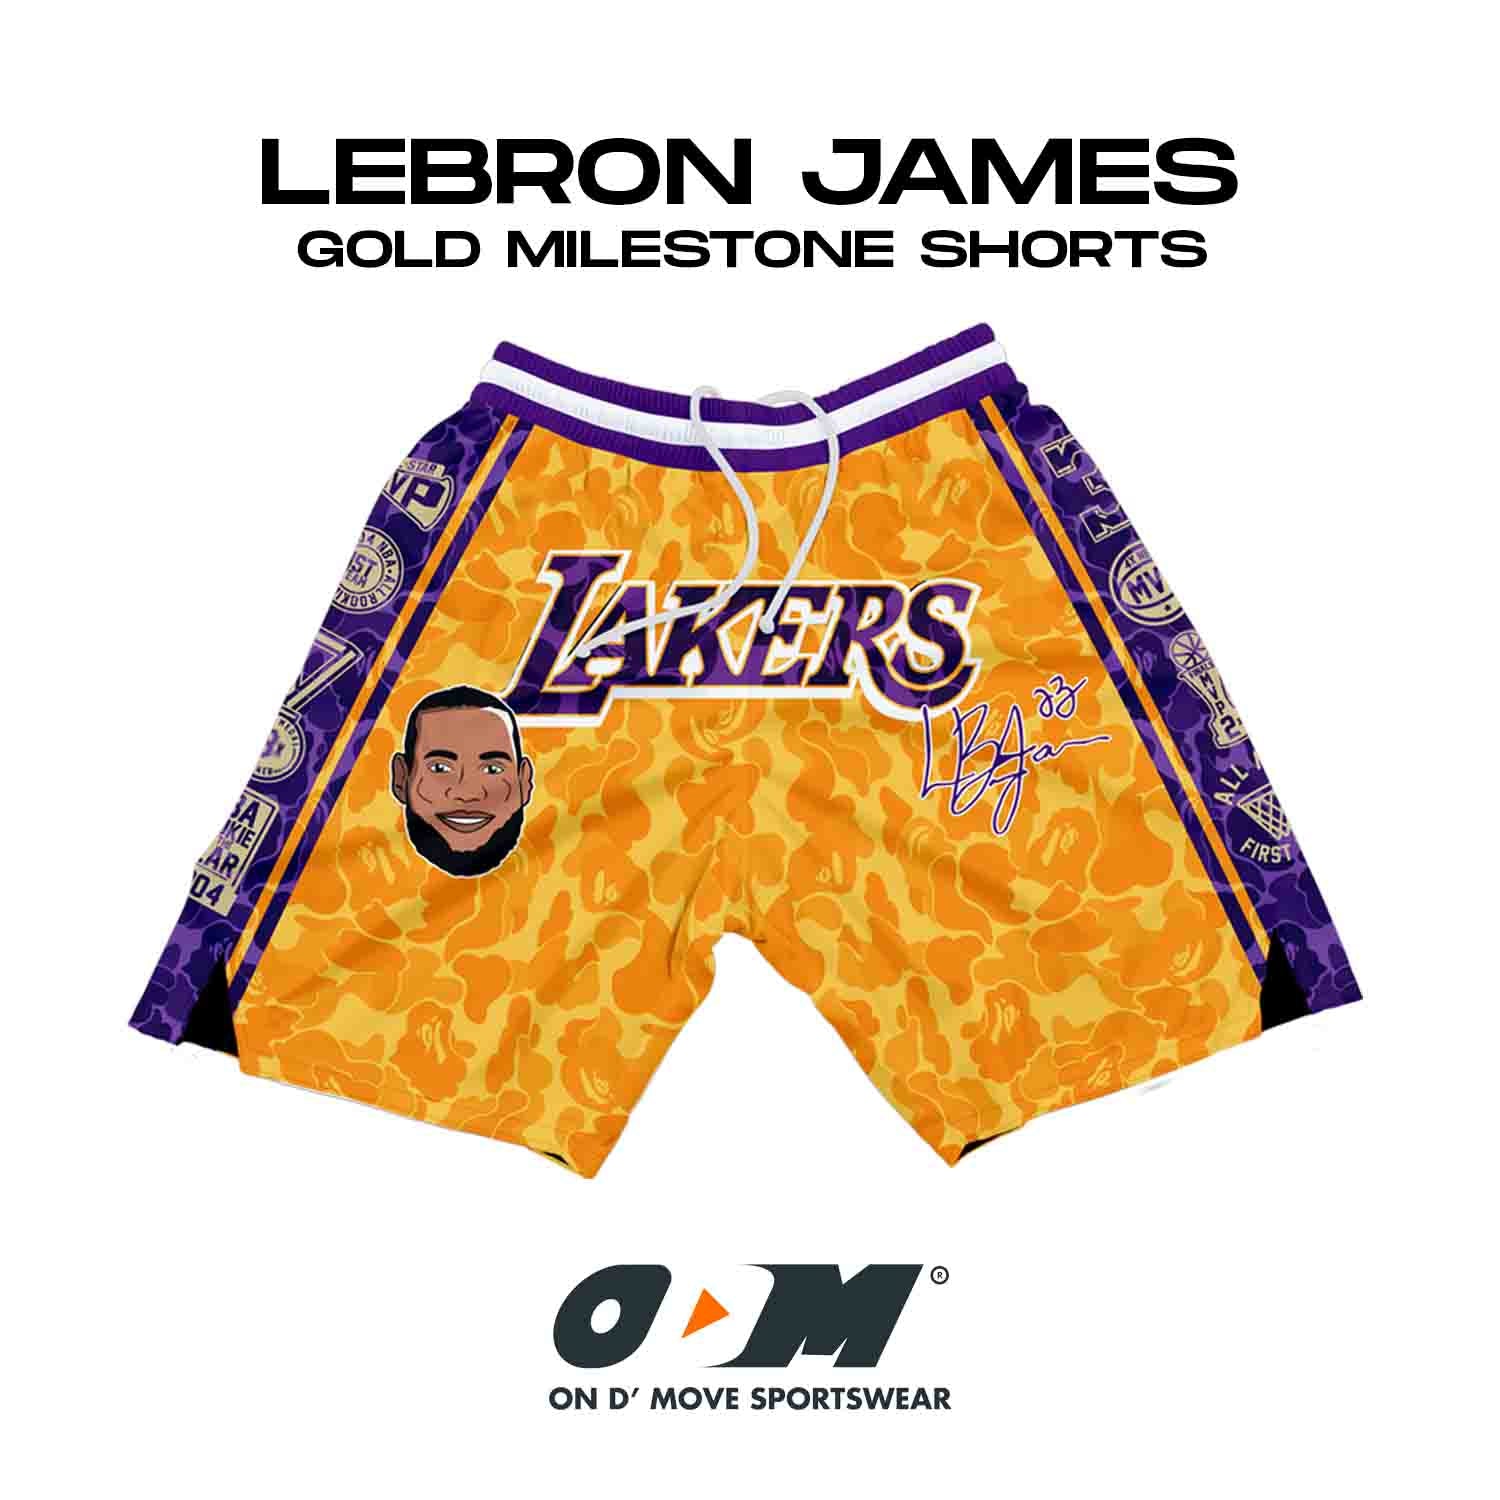 LeBron James Gold Milestone Retro Shorts